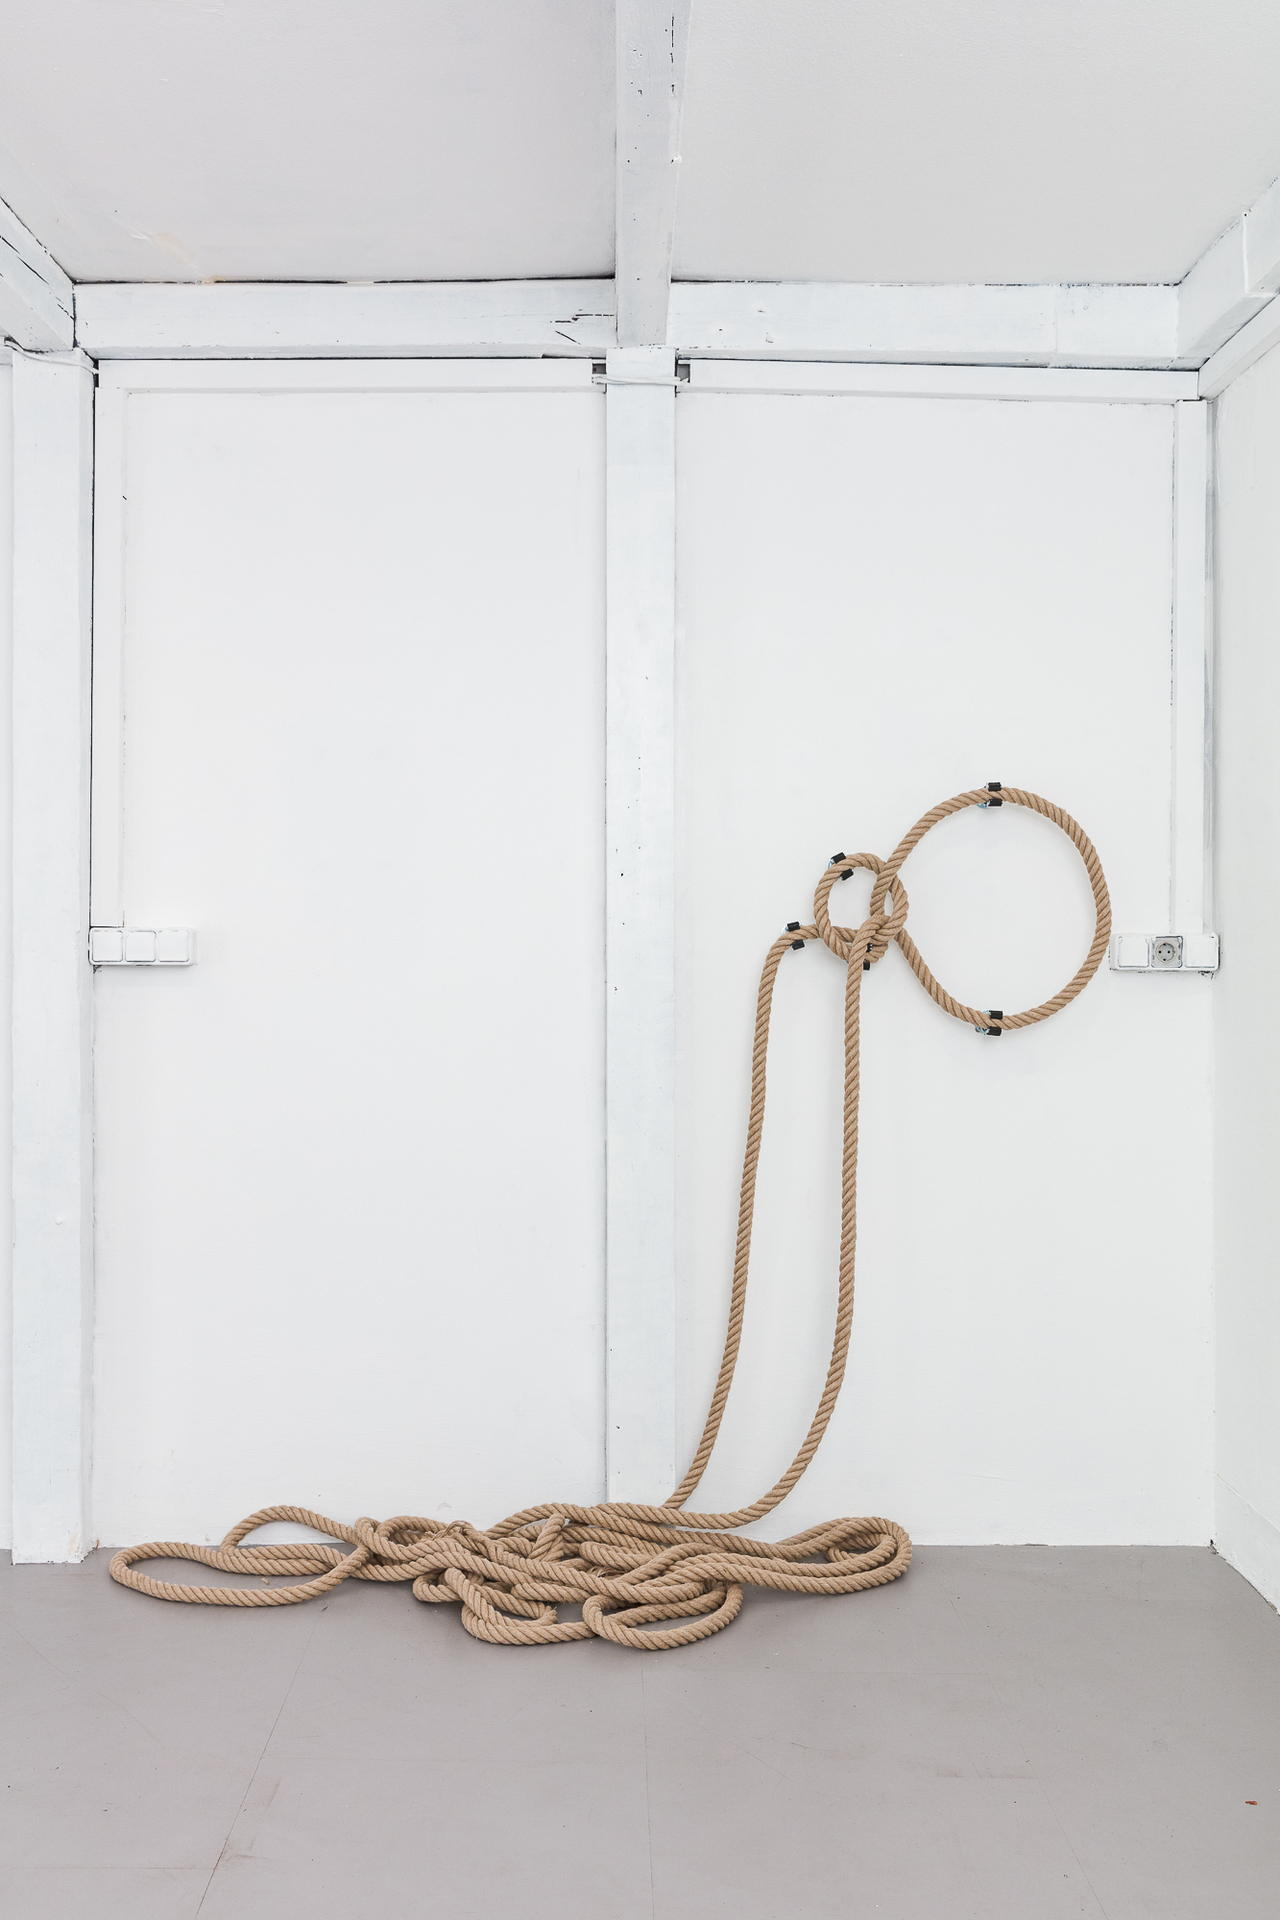 7Schirin Charlot, Round Dance, 2020, Hemp rope & device holder, 185 x 53 cm